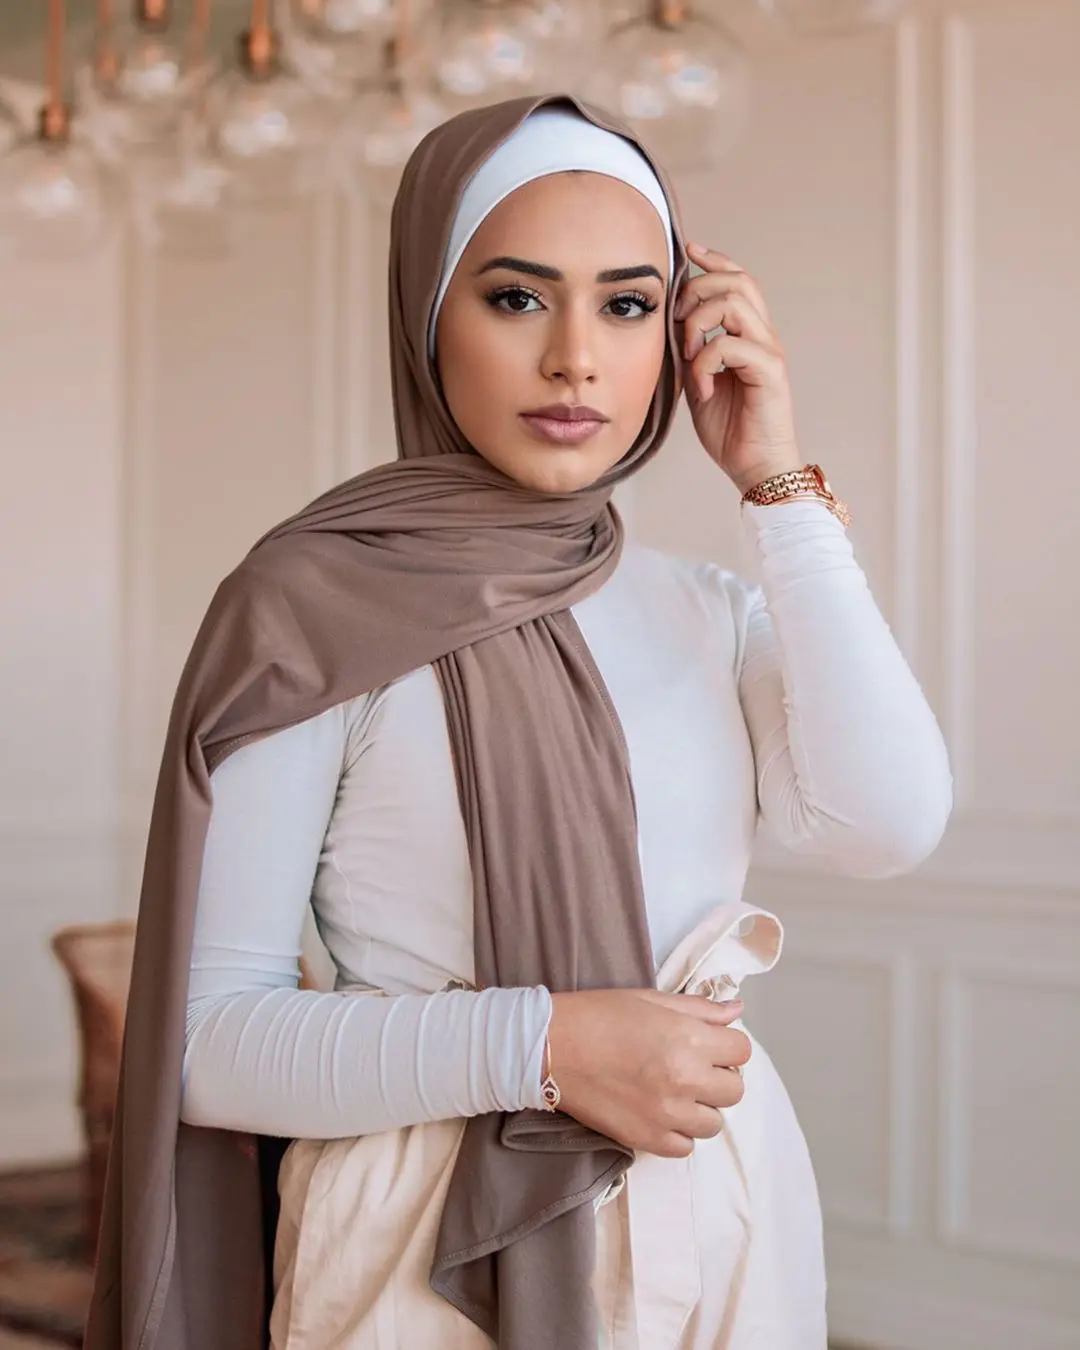 doos circulatie waarom Premium Big Size Muslim Woman Cotton Jersey Hijab Scarf With Good Stitch  Stretchy Shawls Scarf For Women - Buy Jersey Hijab,Women Scarf,Stretchy  Cotton Jersey Hijab Product on Alibaba.com